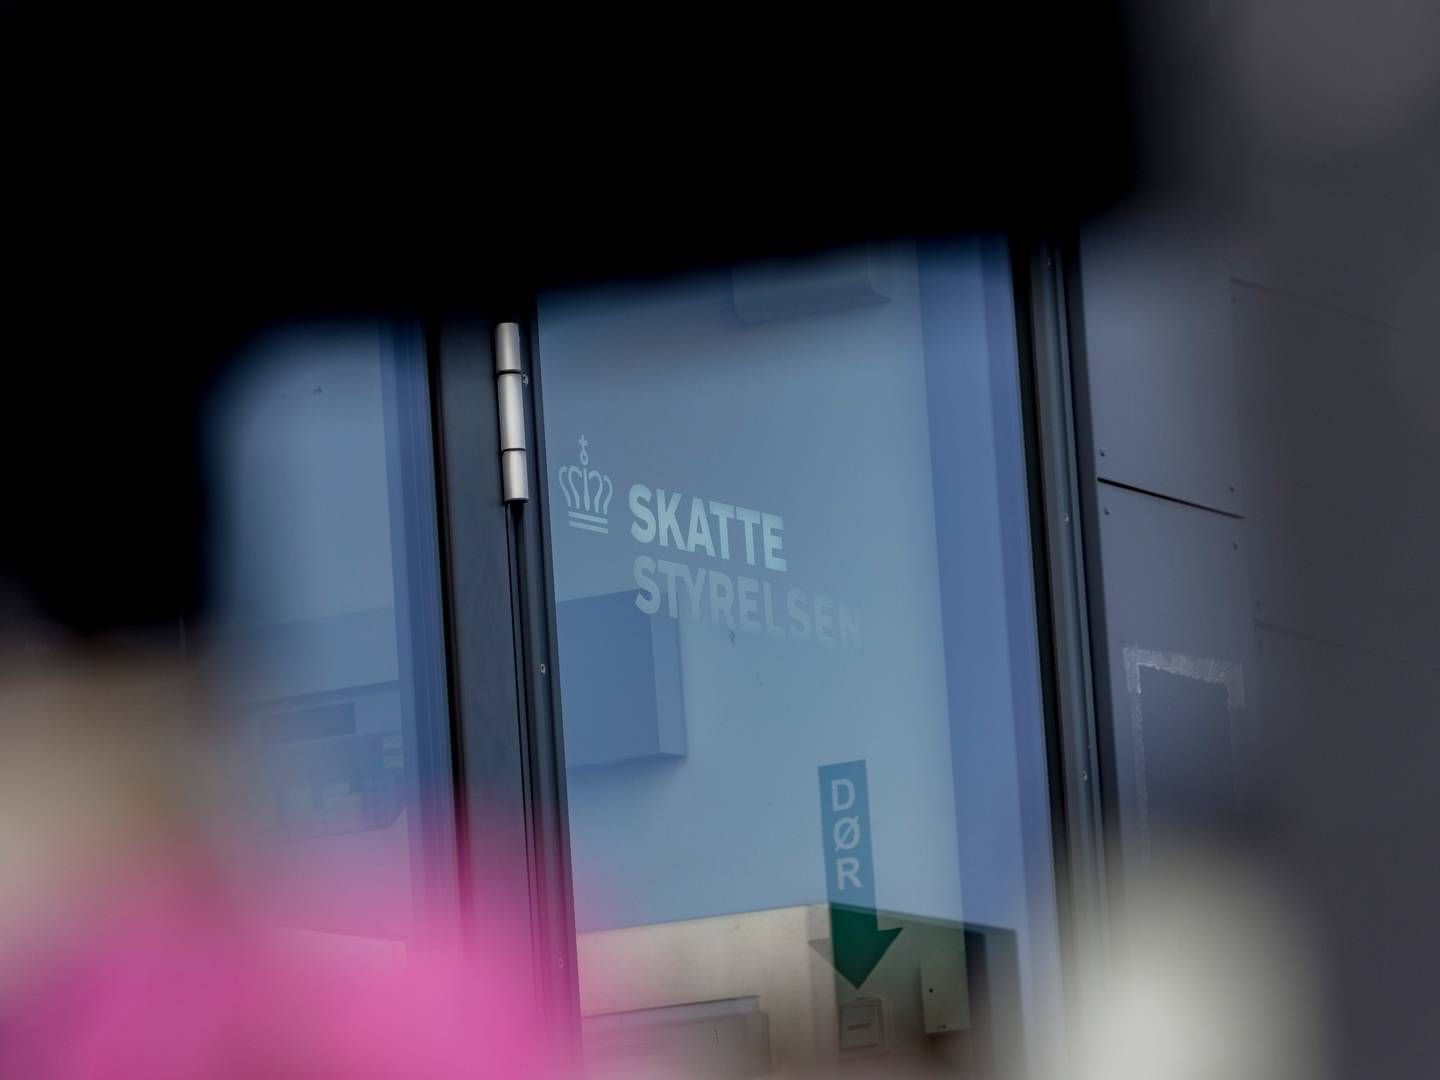 Den dømte kvinde har ifølge Retten i Roskilde hjulpet 117 personer med at snyde skattevæsenet. | Foto: Axel Emil Hammerbo